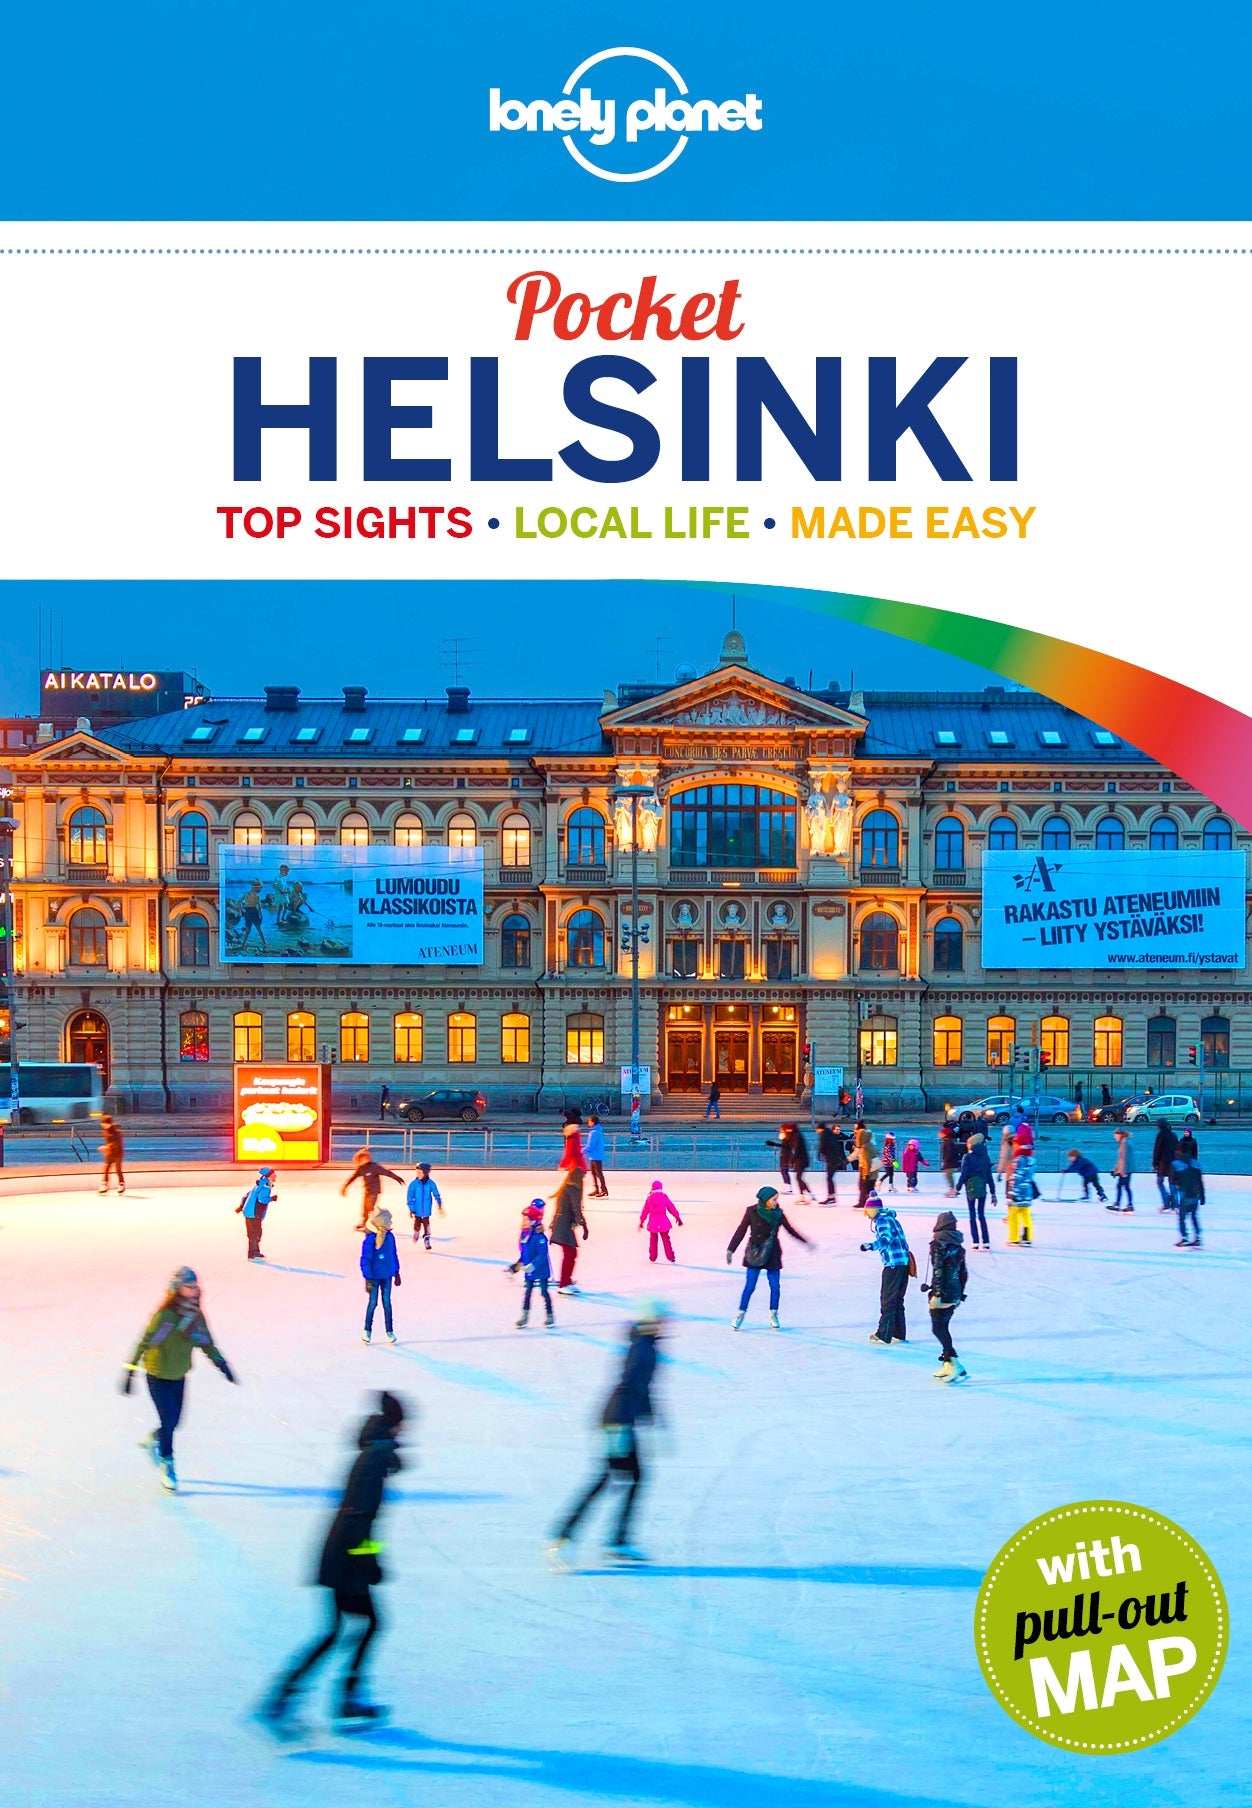 Pocket Helsinki preview